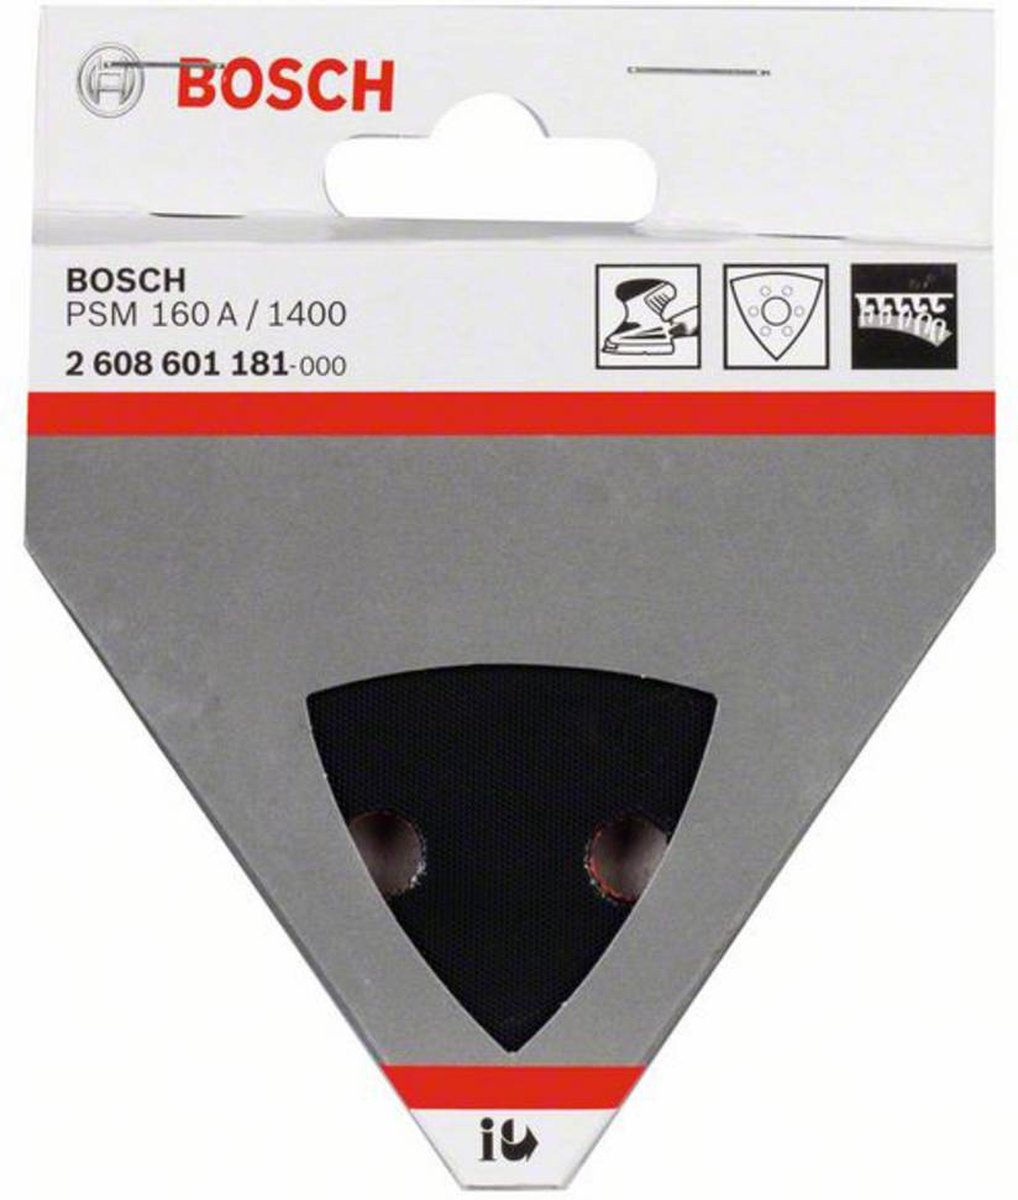 Bosch Schuurplateau - PSM 1400, PSM 160 AE | bol.com